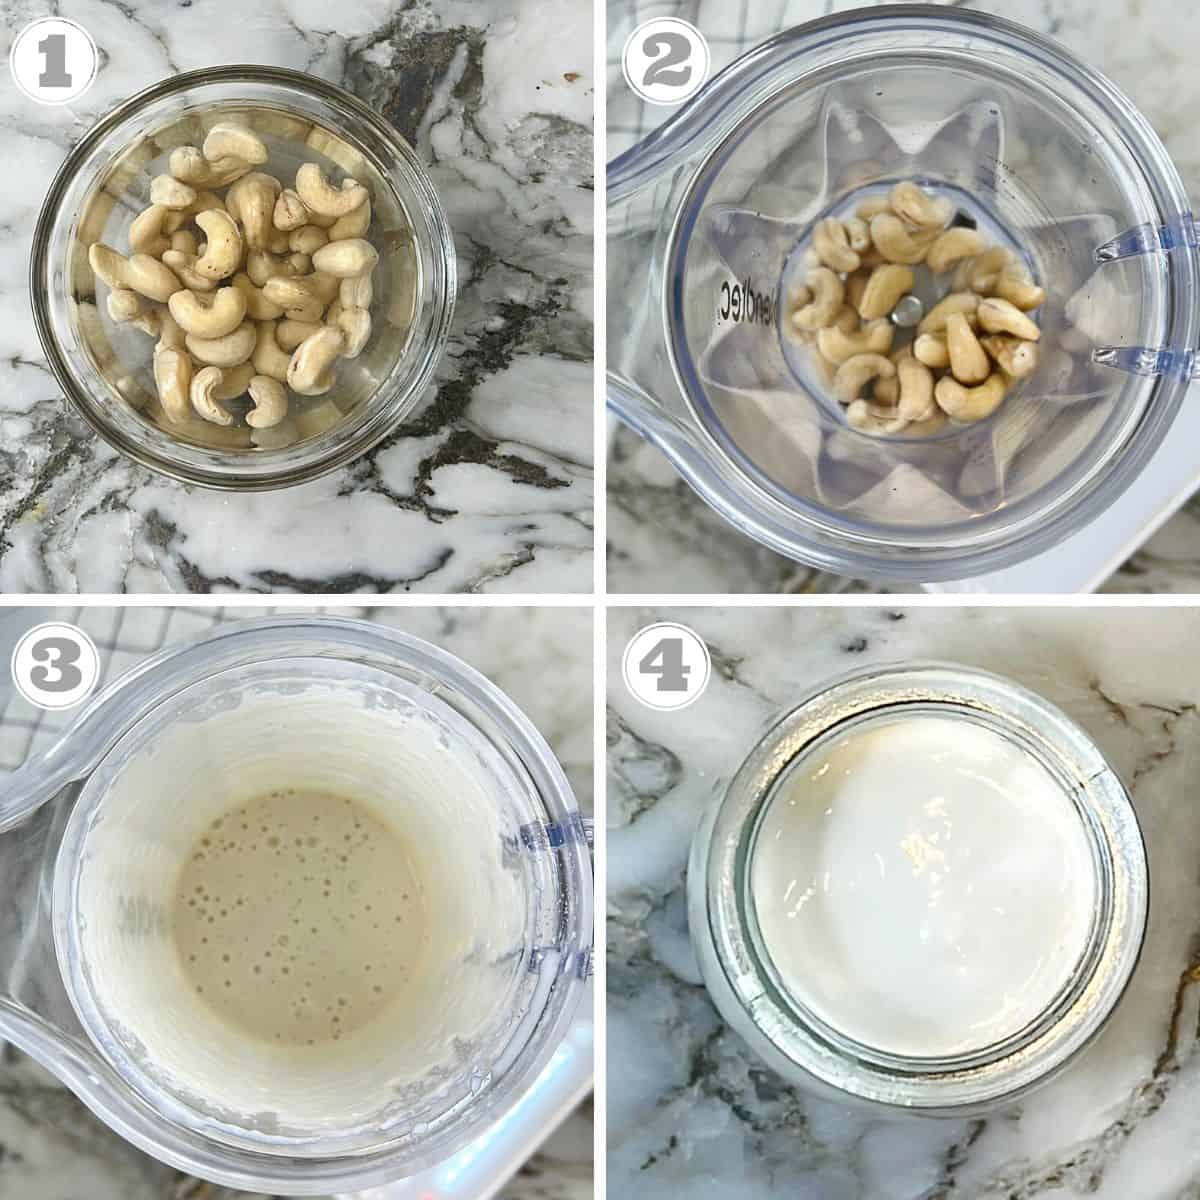 photos one through four showing how to make cashew cream 